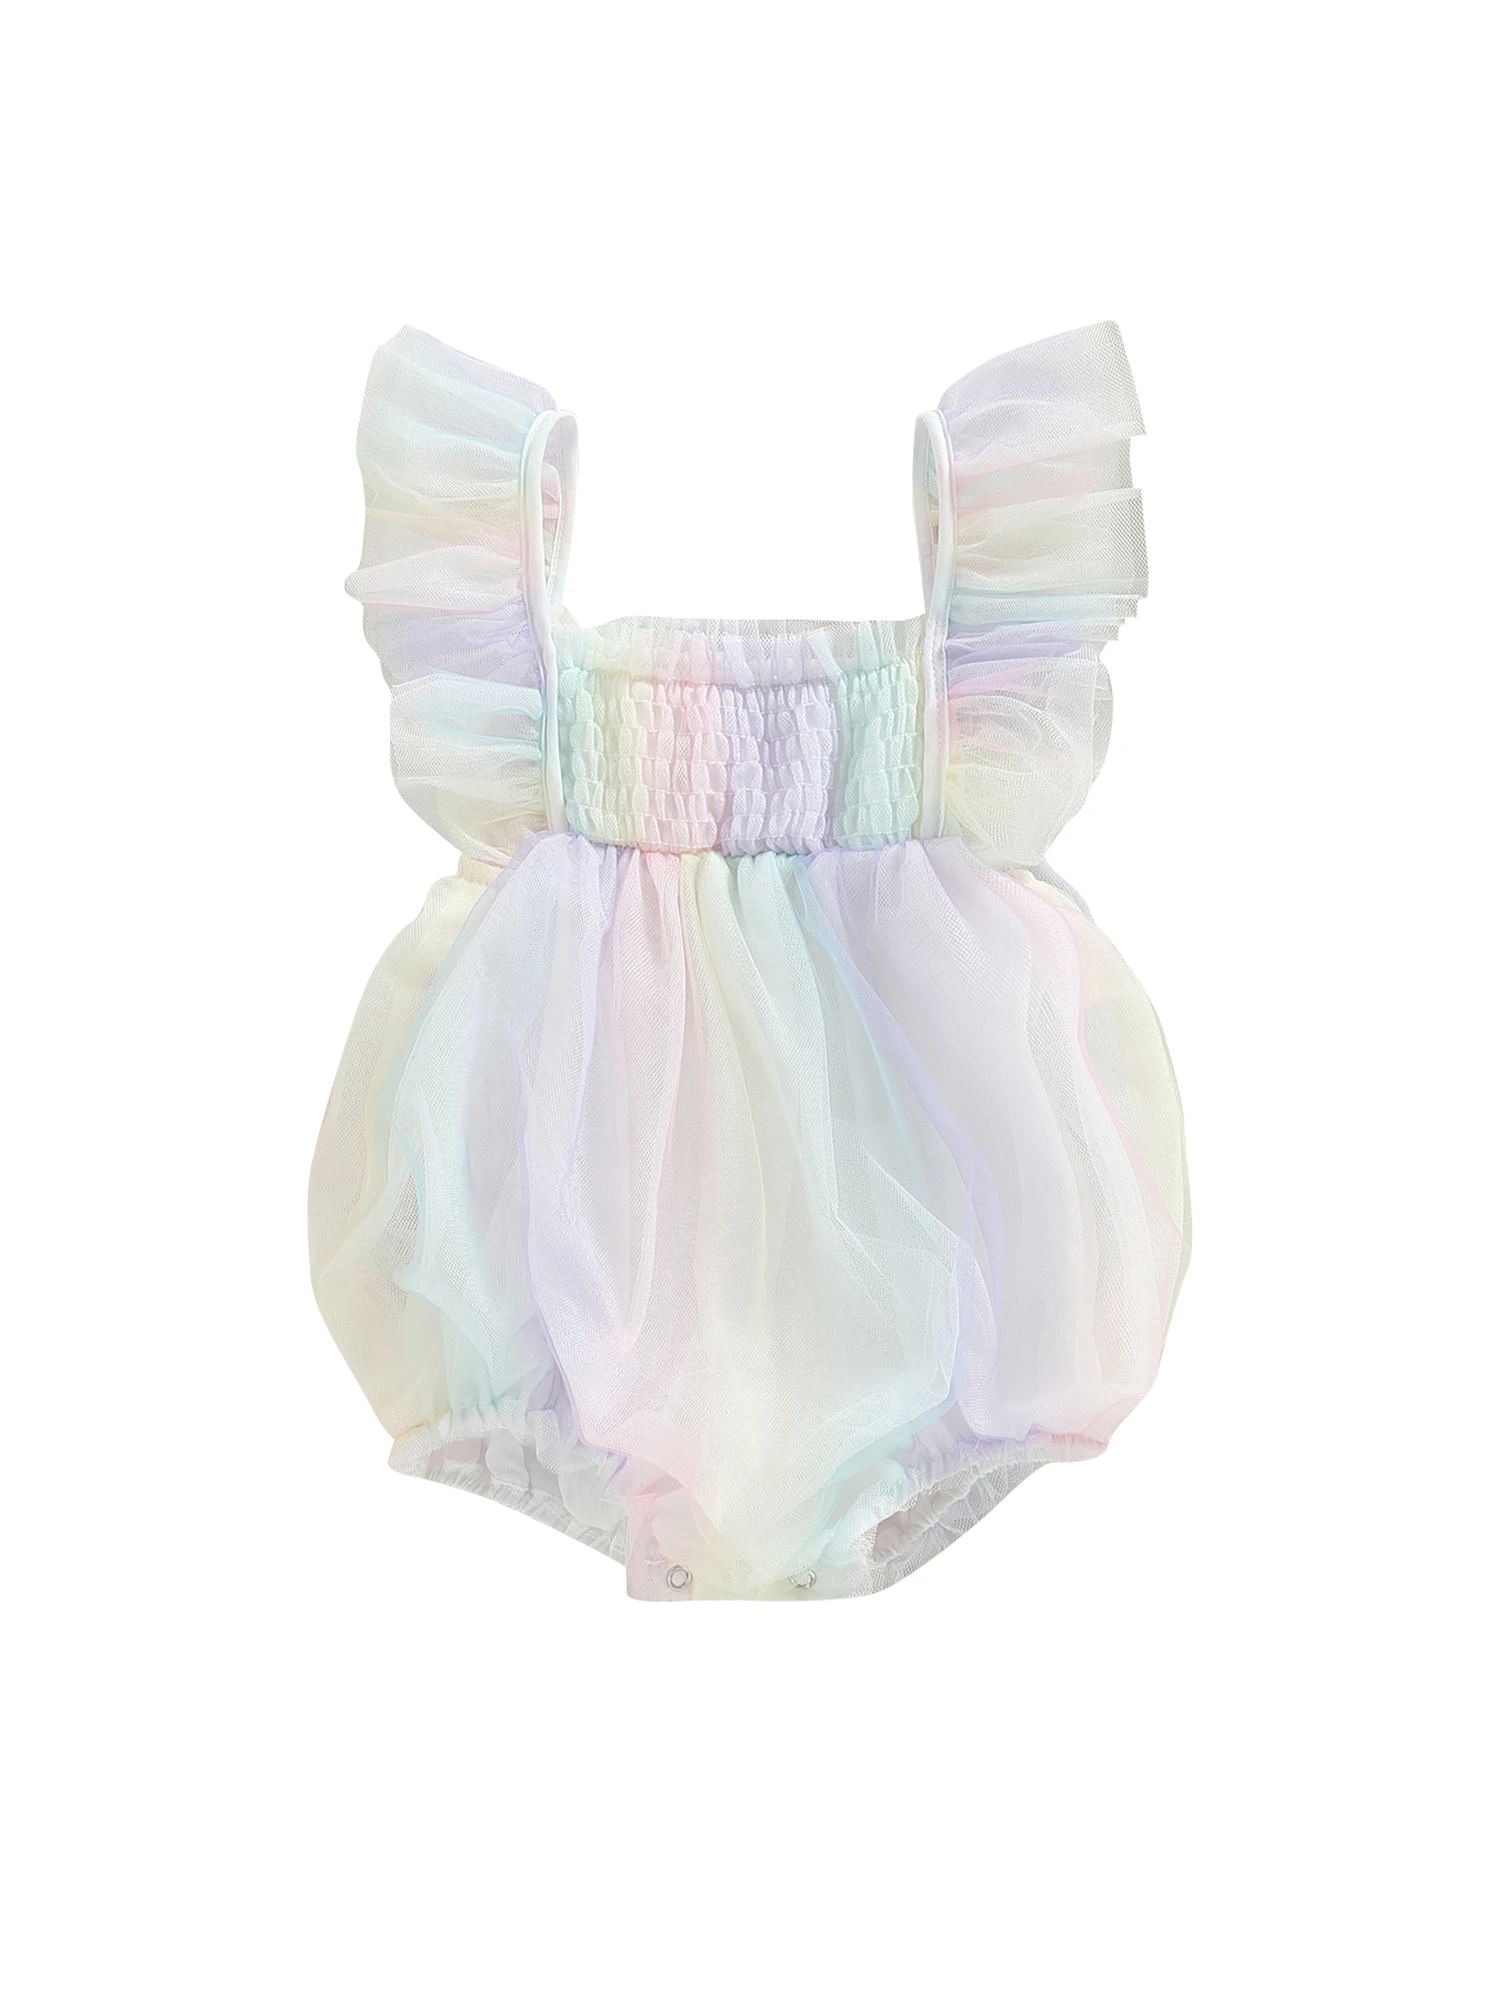 

Baby Girl Romper Fly Sleeve Mesh Tulle Bubble Boho Bodysuit Jumpsuit Photoshoot Cake Smash Clothes